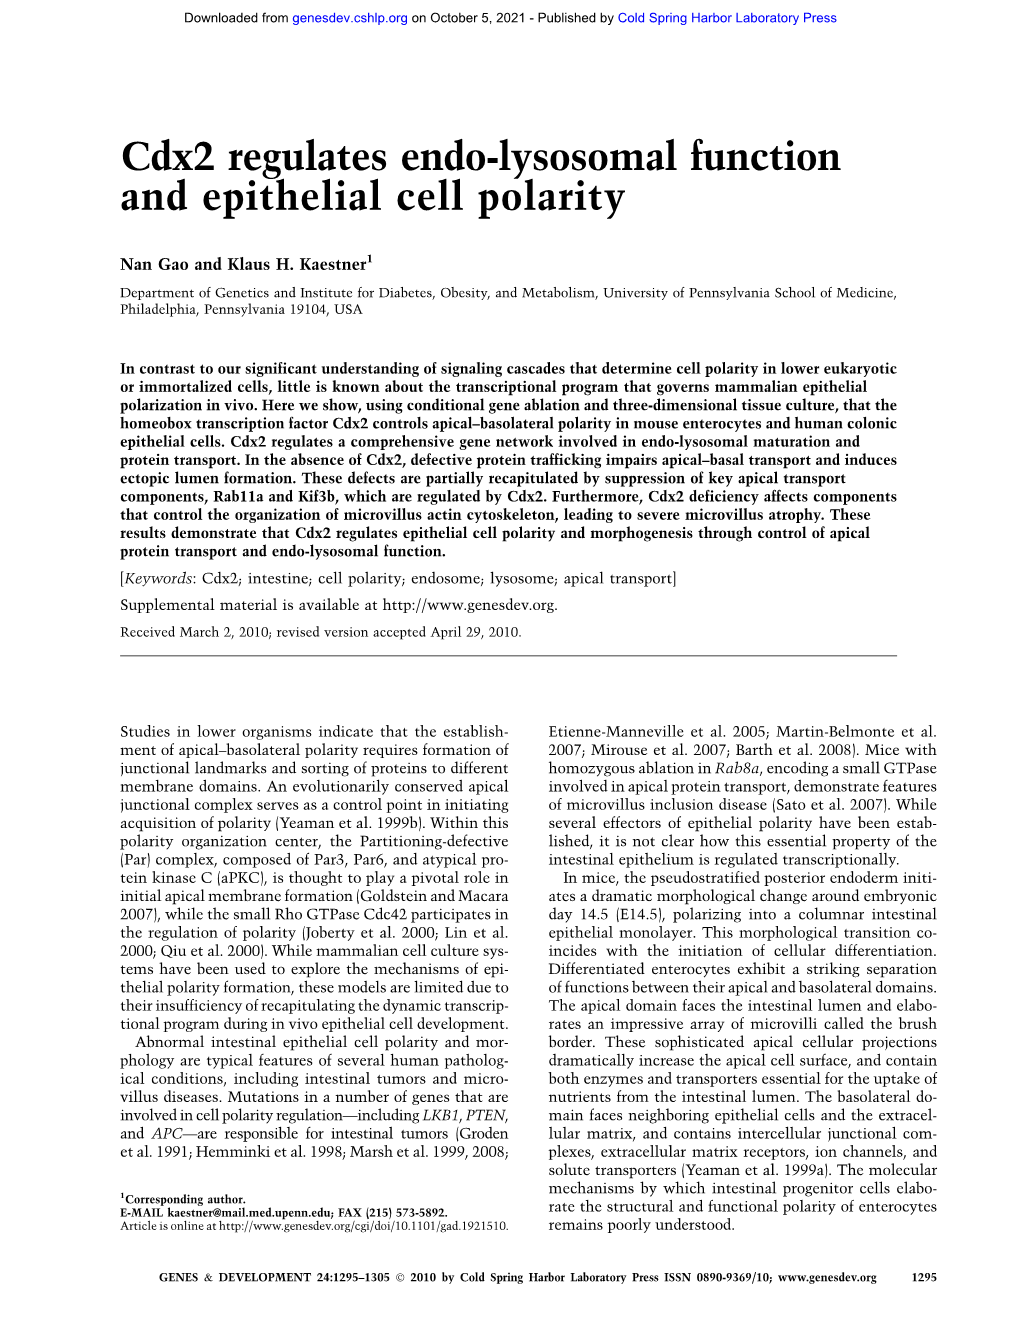 Cdx2 Regulates Endo-Lysosomal Function and Epithelial Cell Polarity